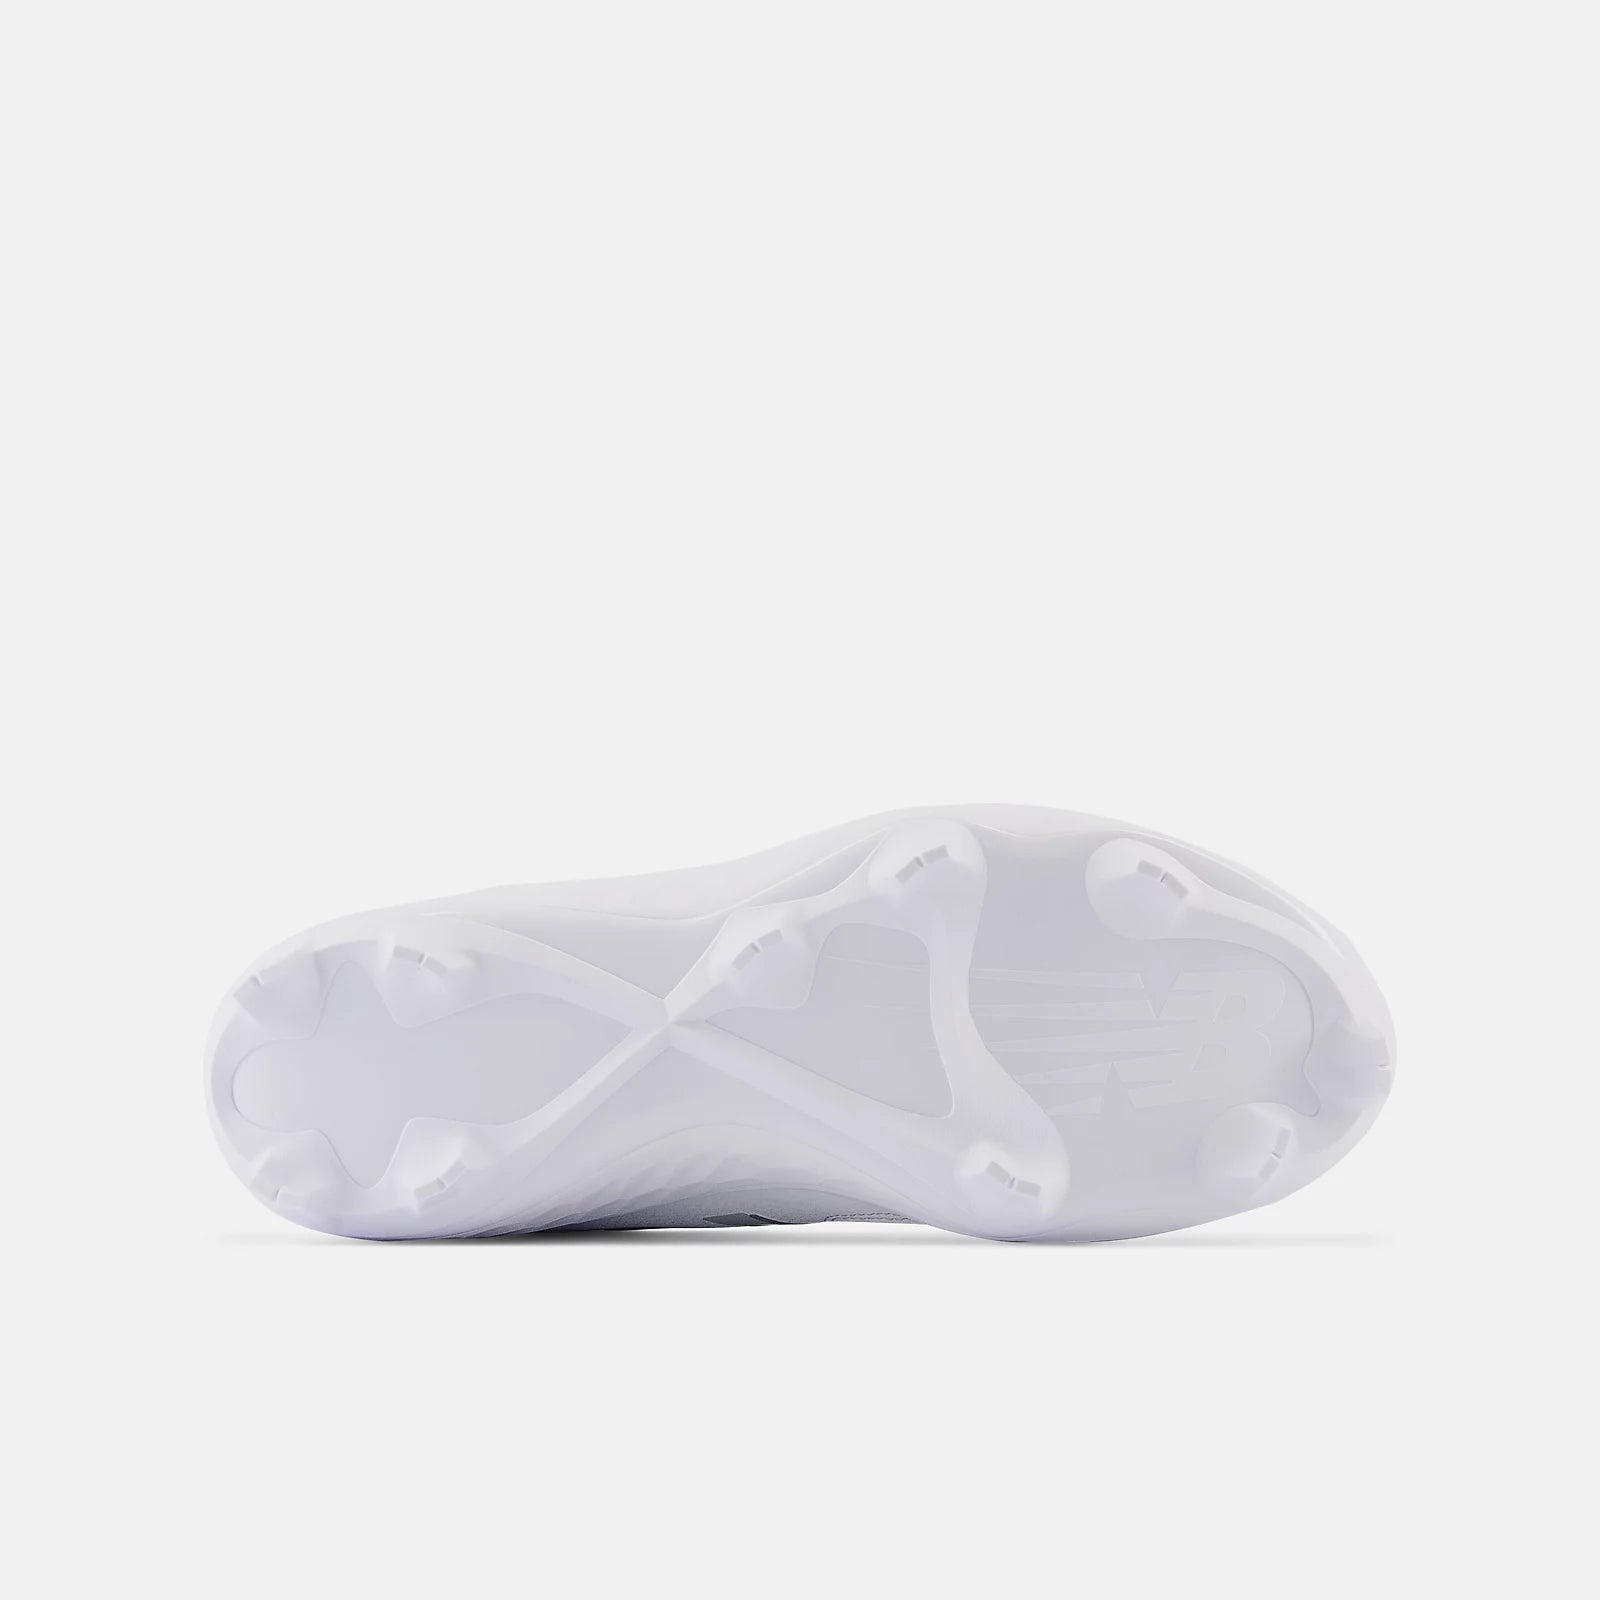 New Balance White PL3000v6 Molded Cleats